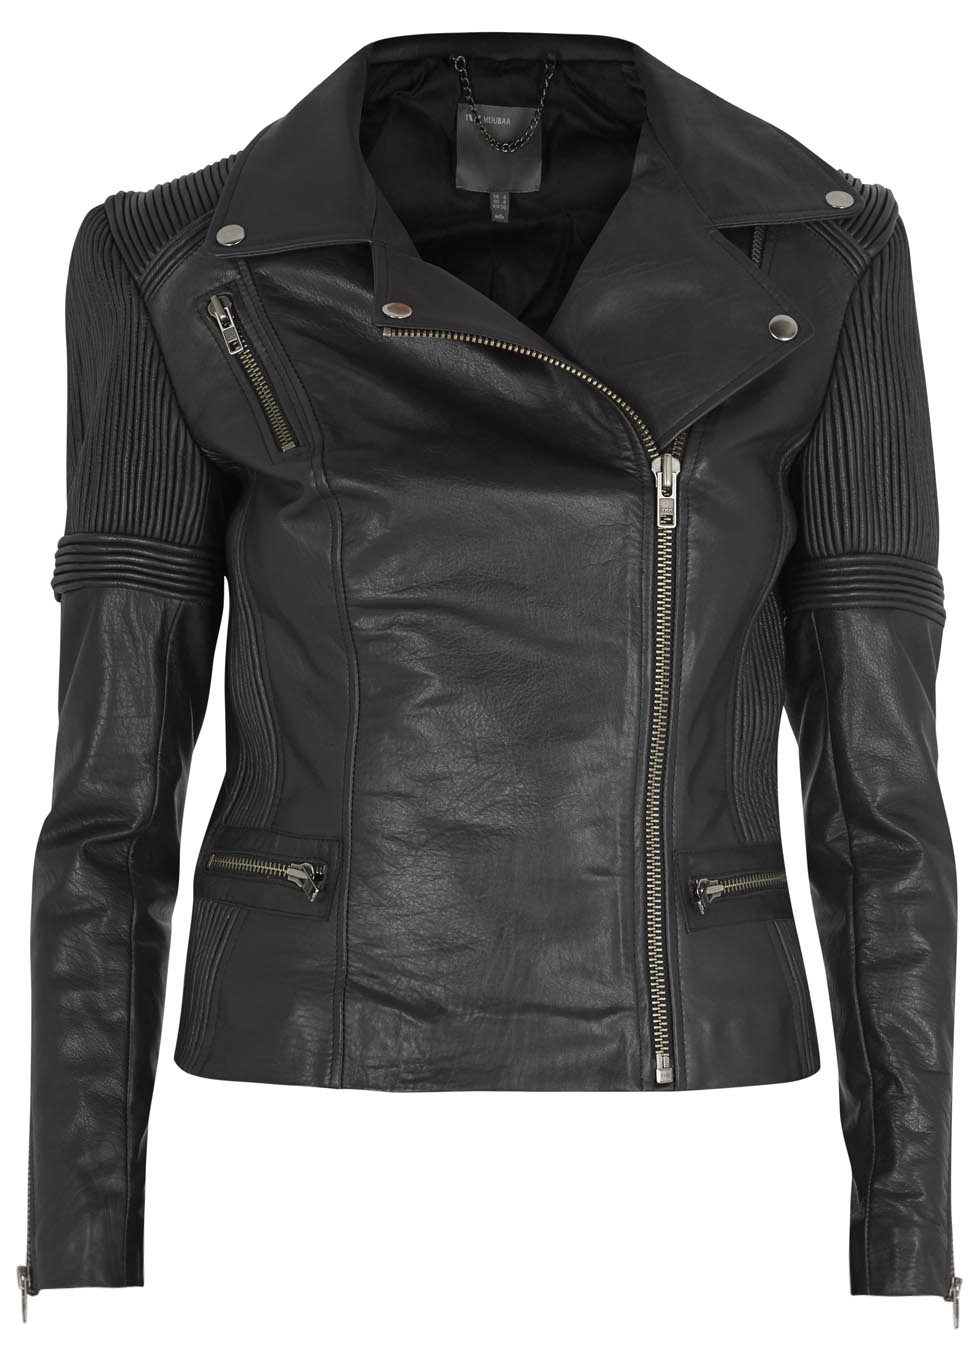 Penza black leather biker jacket